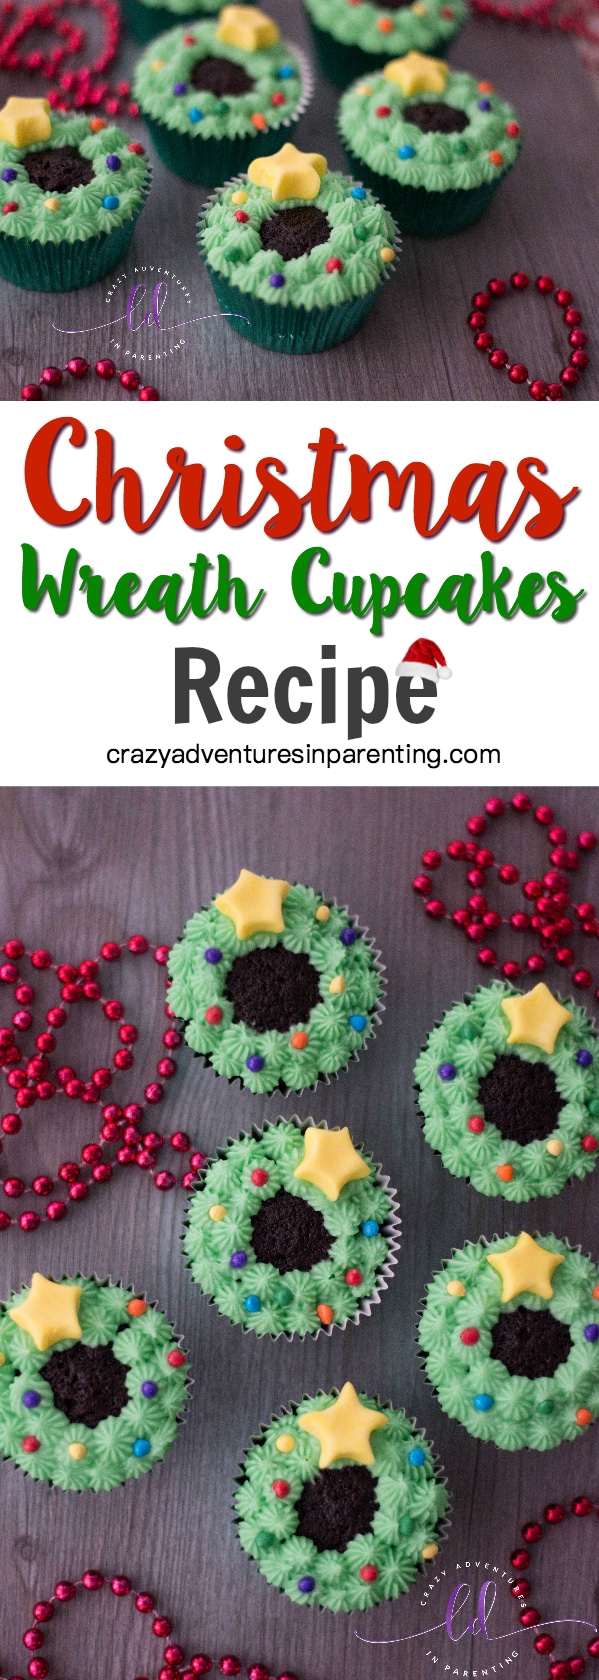 Christmas Wreath Cupcakes Recipe